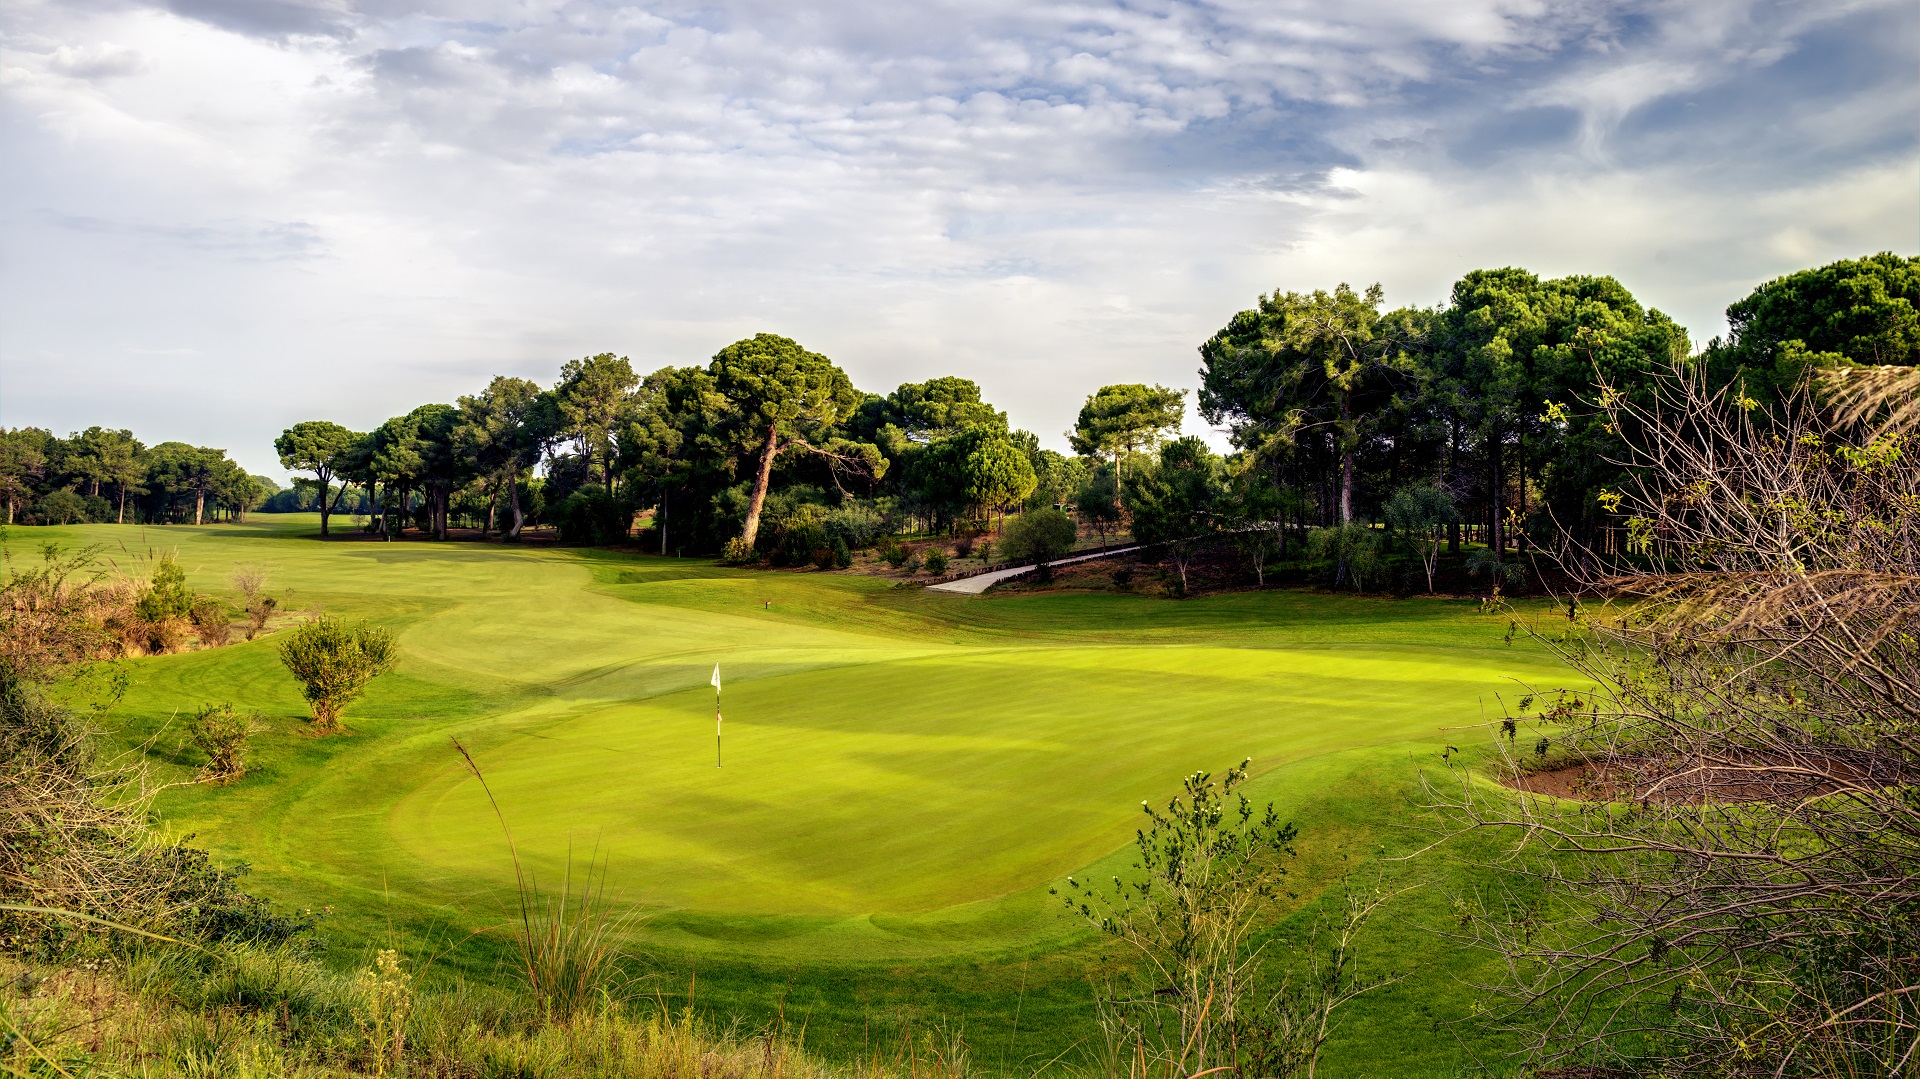 Cornelia Golf Club | Golf i Belek